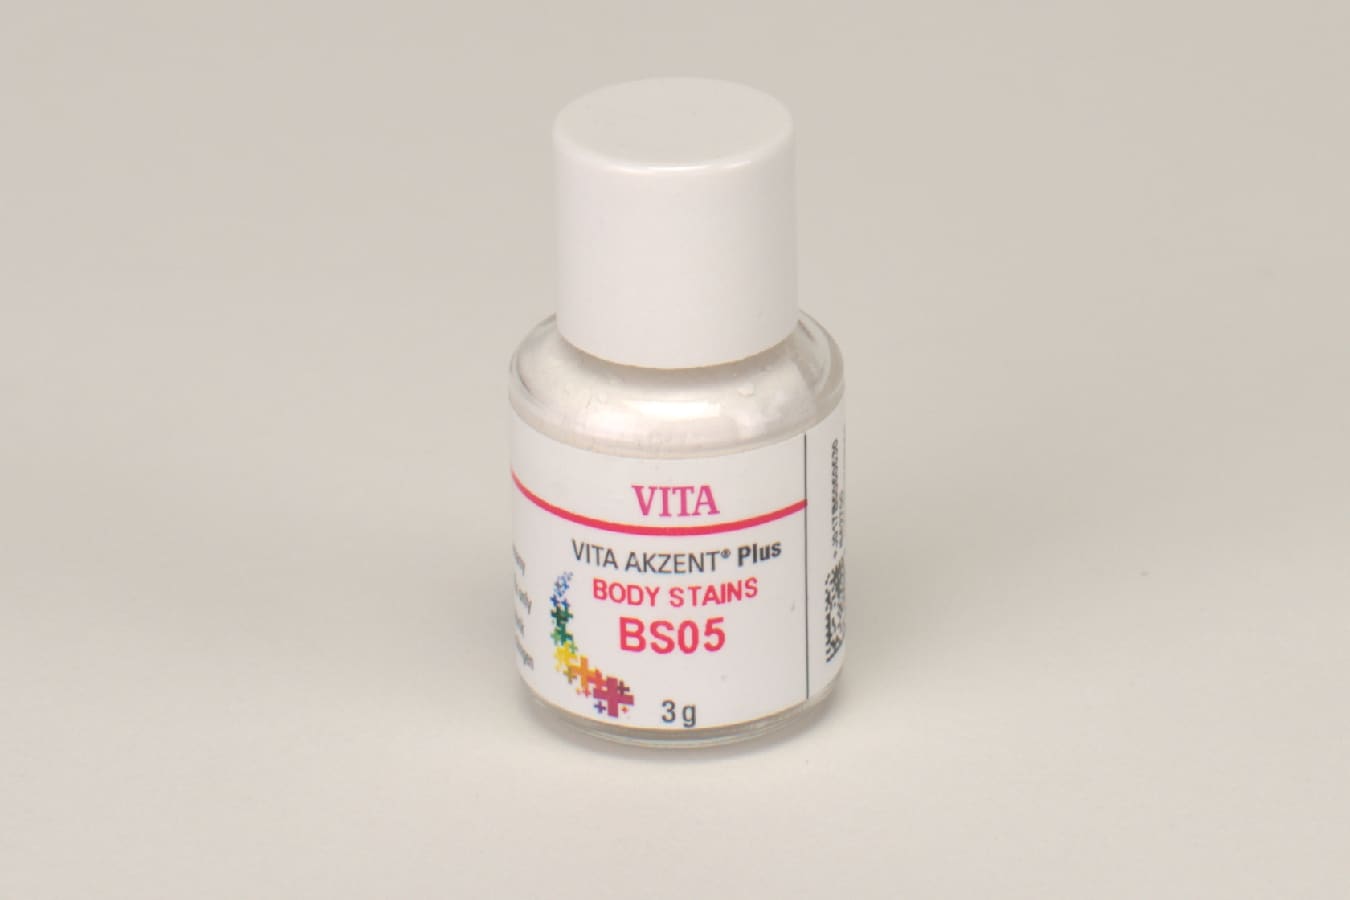 Vita Akzent Plus Powder Body Stains BS5 3g